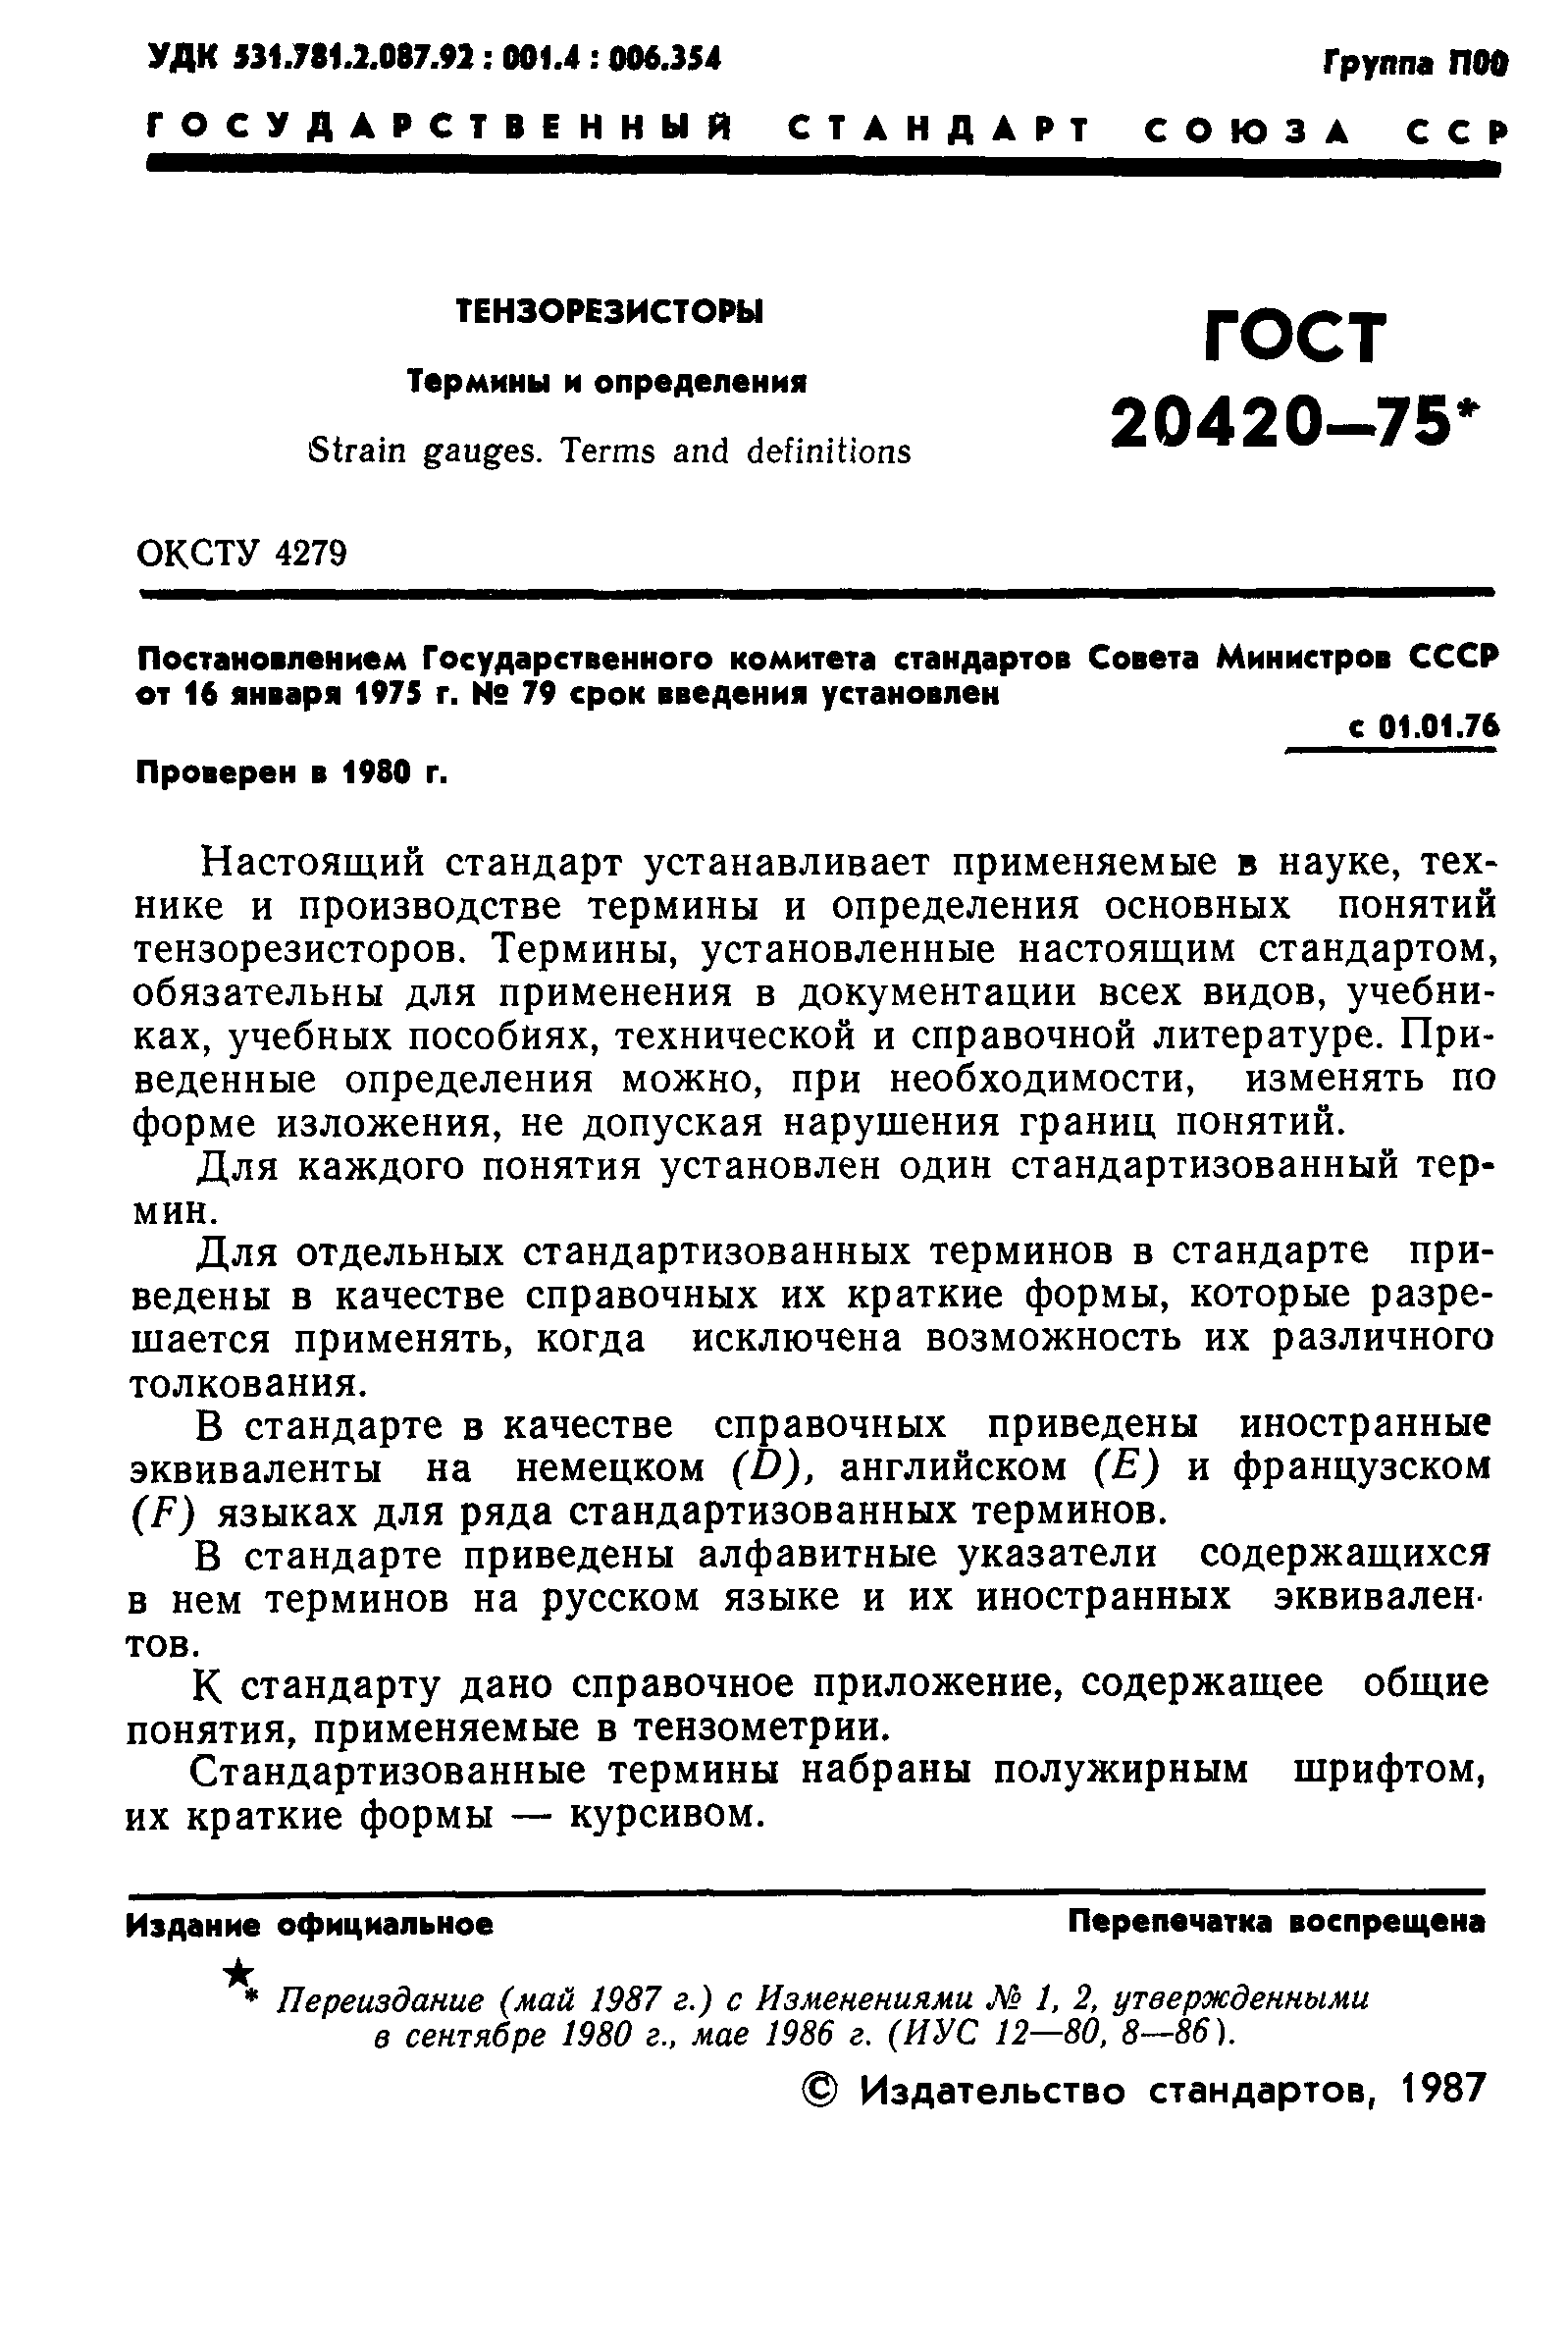 ГОСТ 20420-75